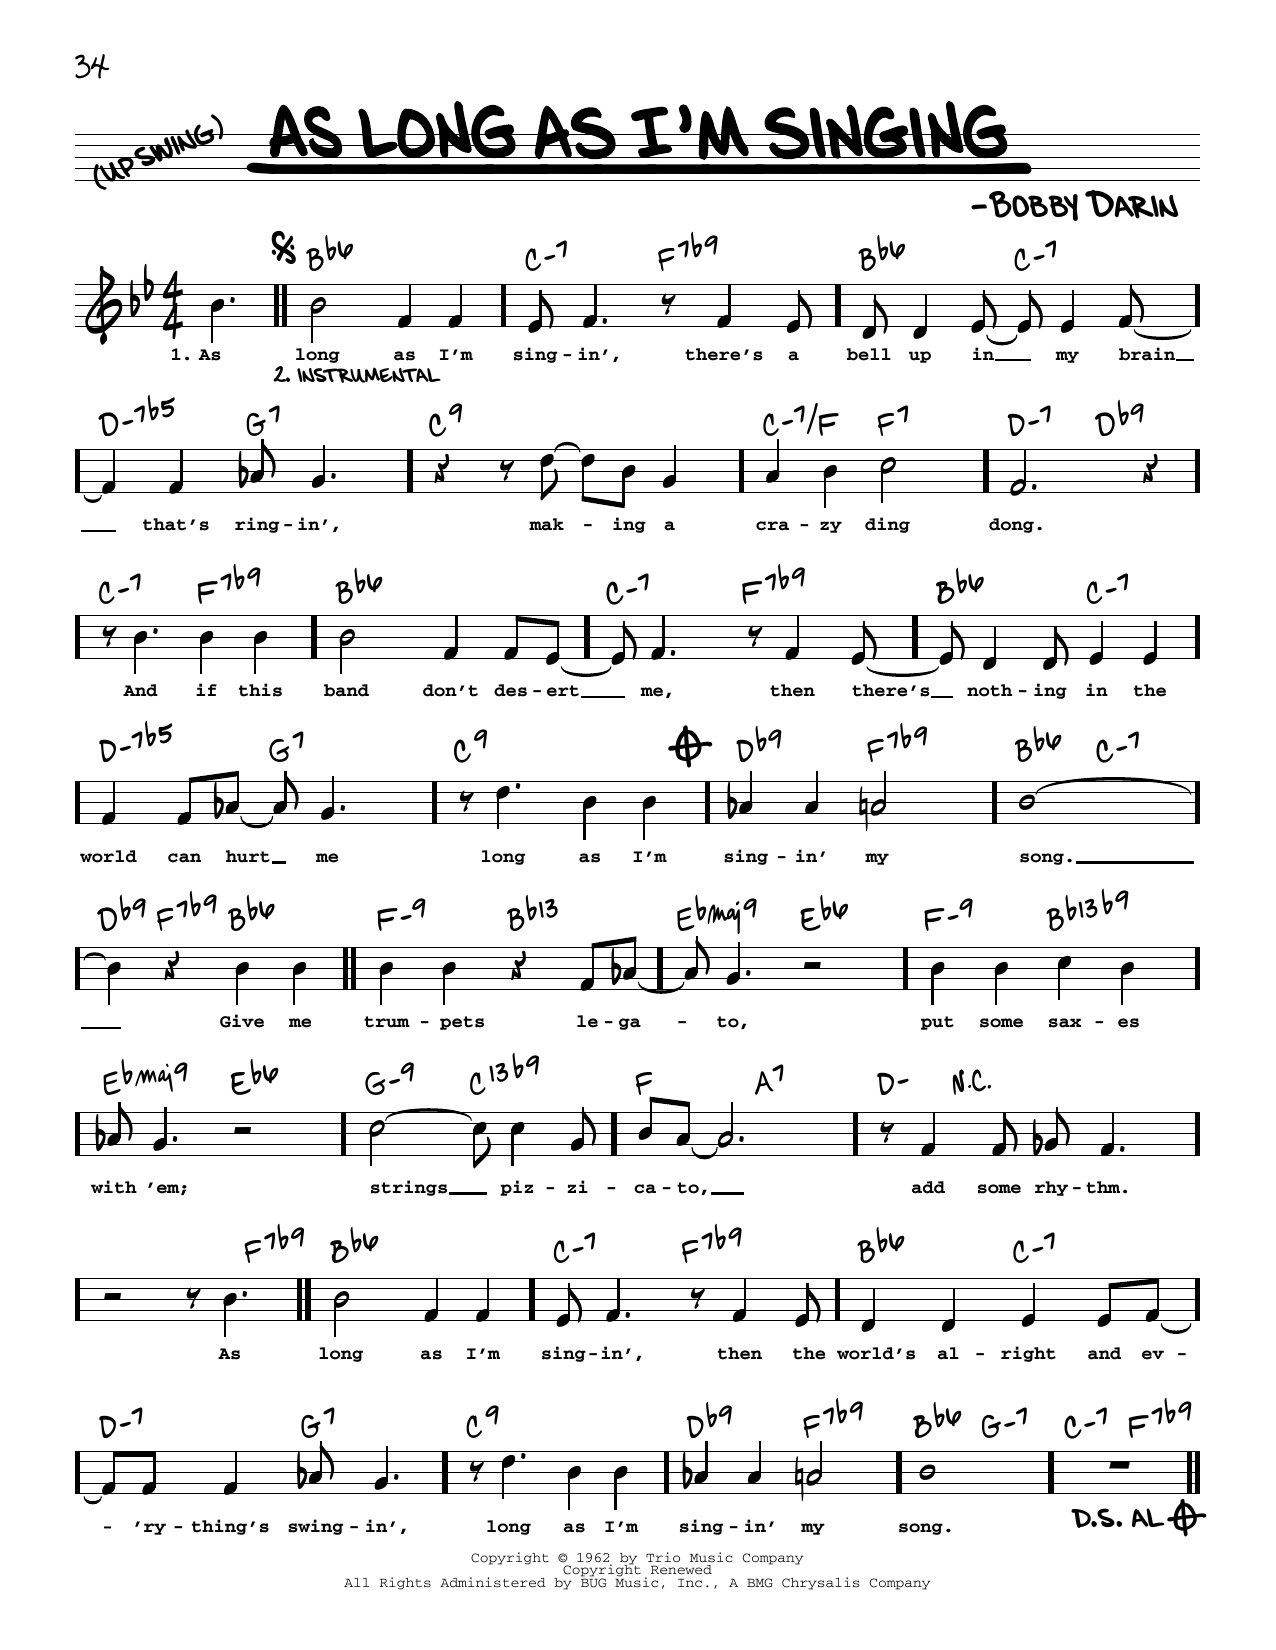 Bobby Darin As Long As I'm Singing (High Voice) Sheet Music Notes & Chords for Real Book – Melody, Lyrics & Chords - Download or Print PDF